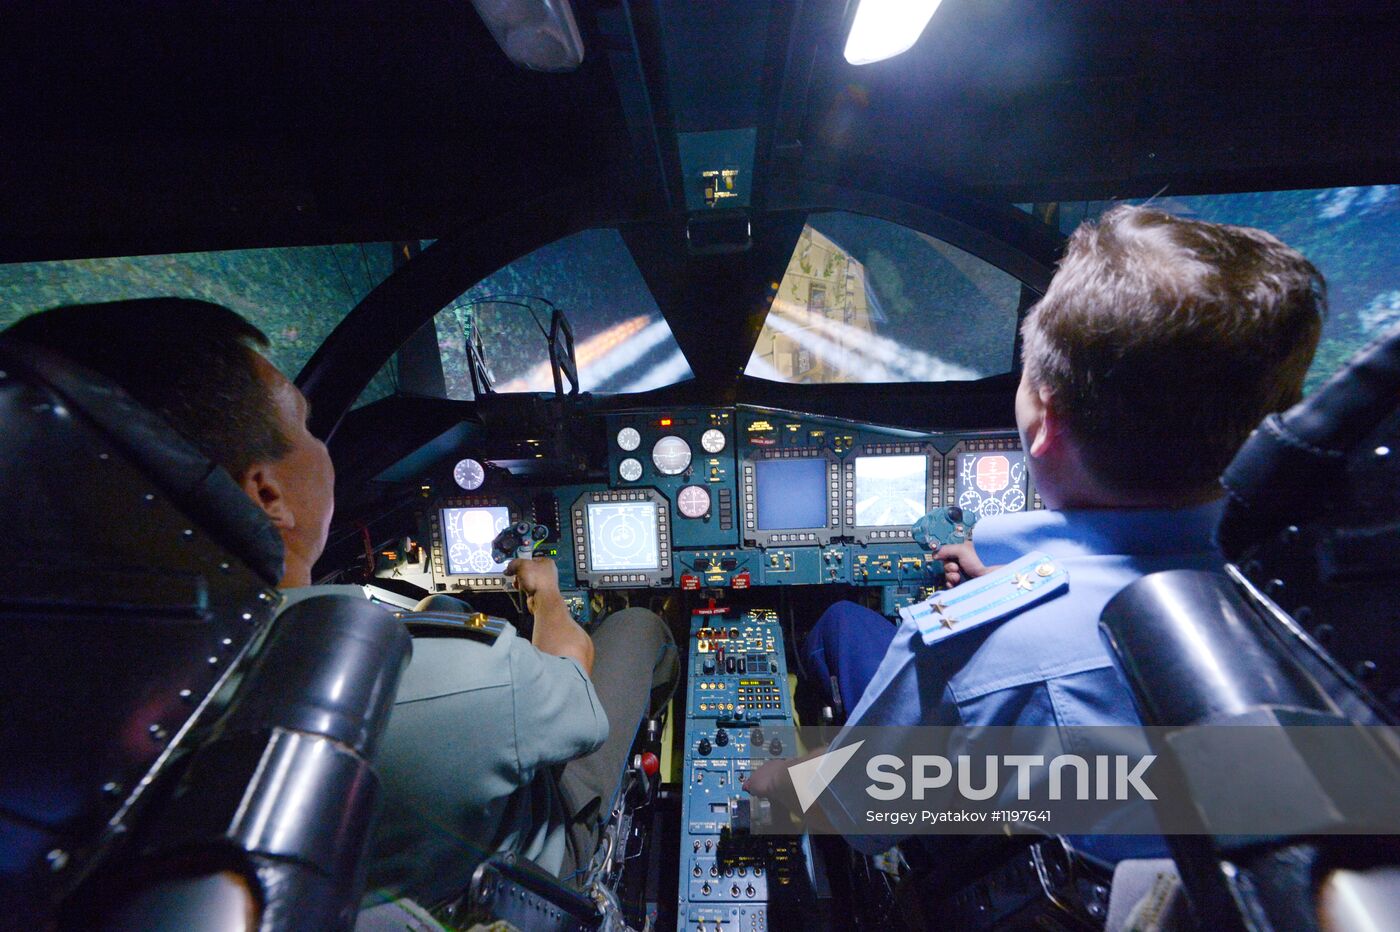 Training simulator for air force pilots retraining